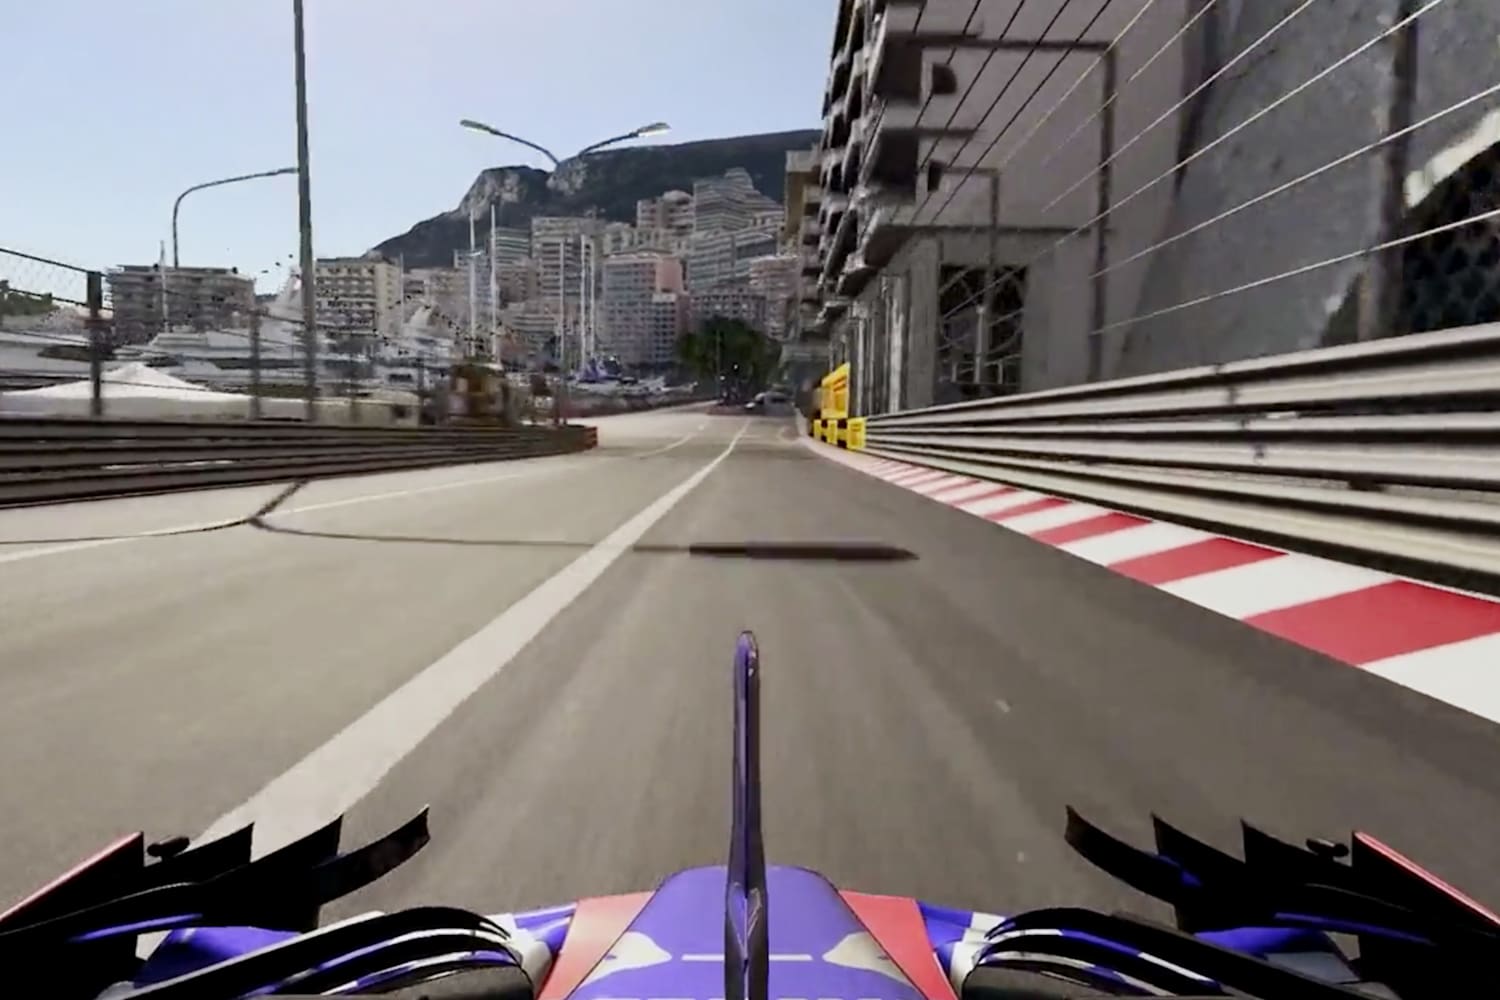 F1 22 Monaco setup: best car settings for the famous street circuit